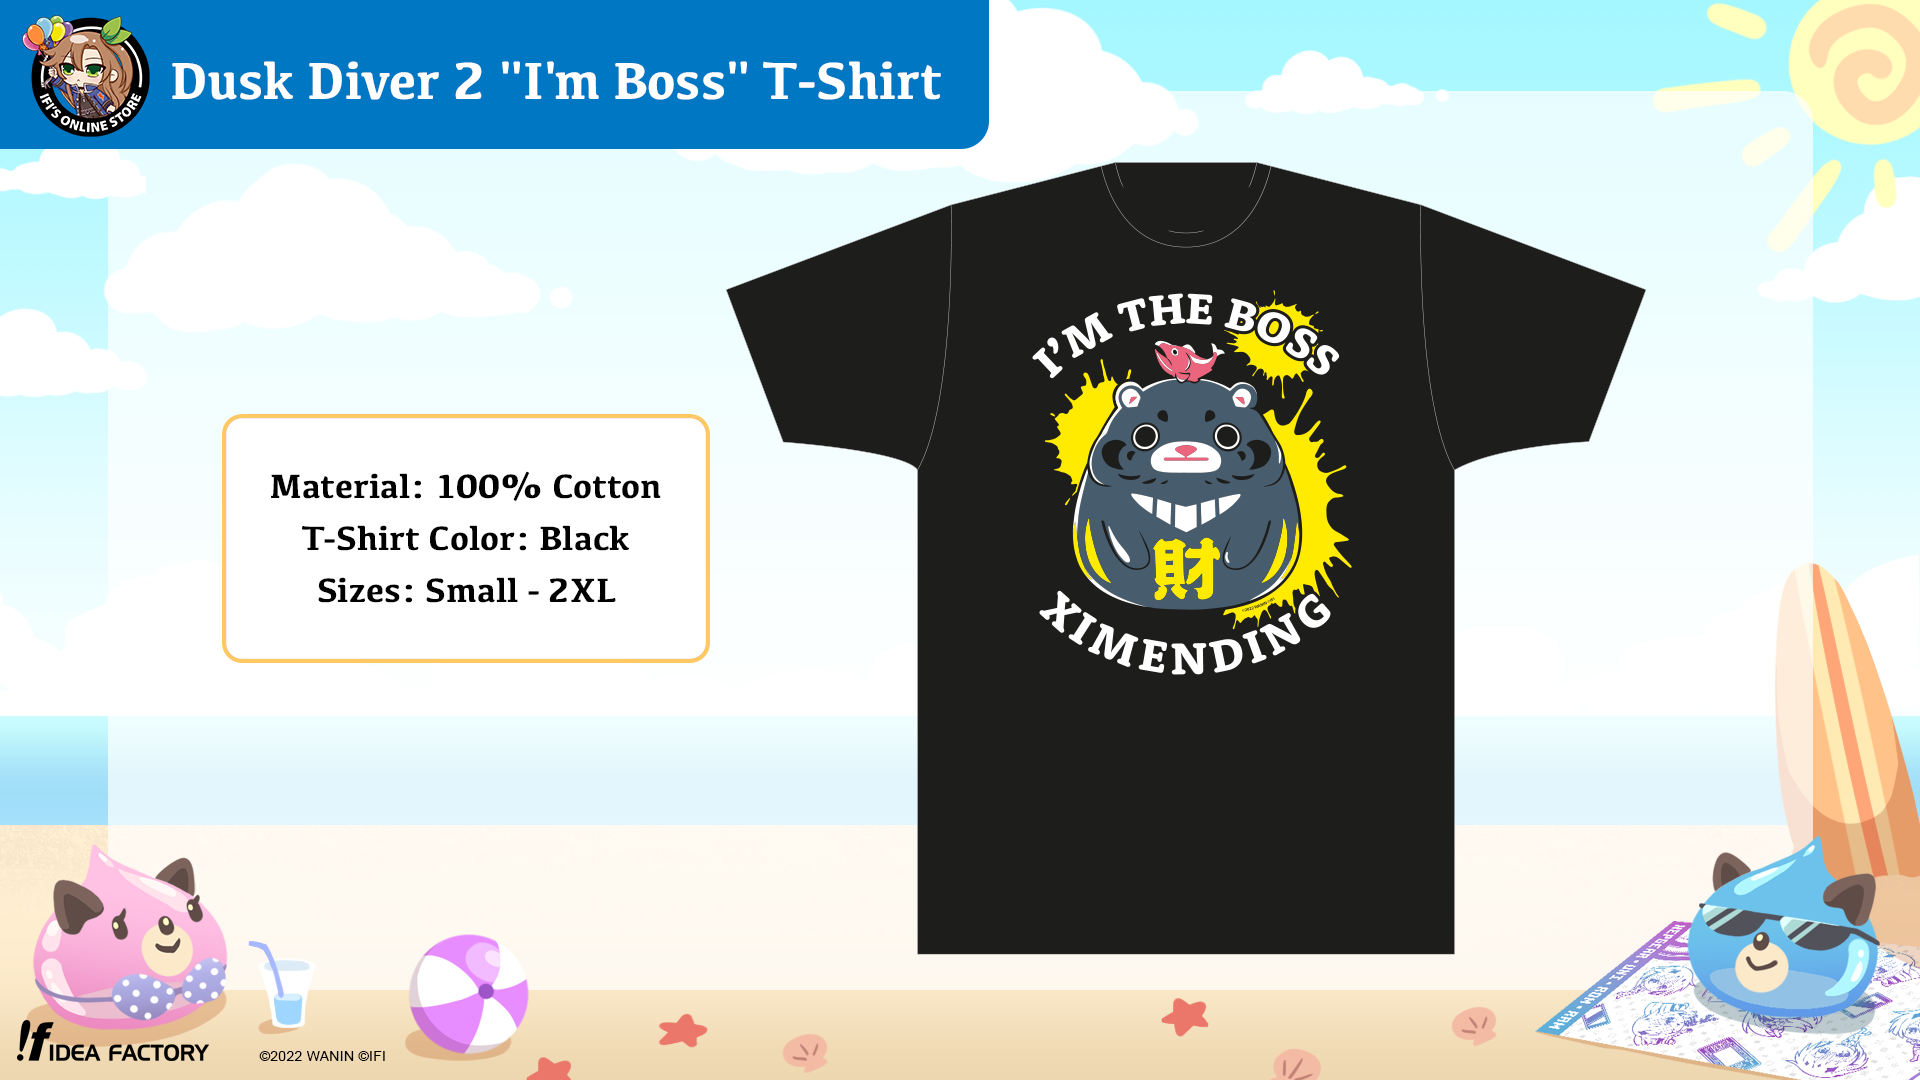 Dusk Diver 2 "I'm Boss" T-Shirt